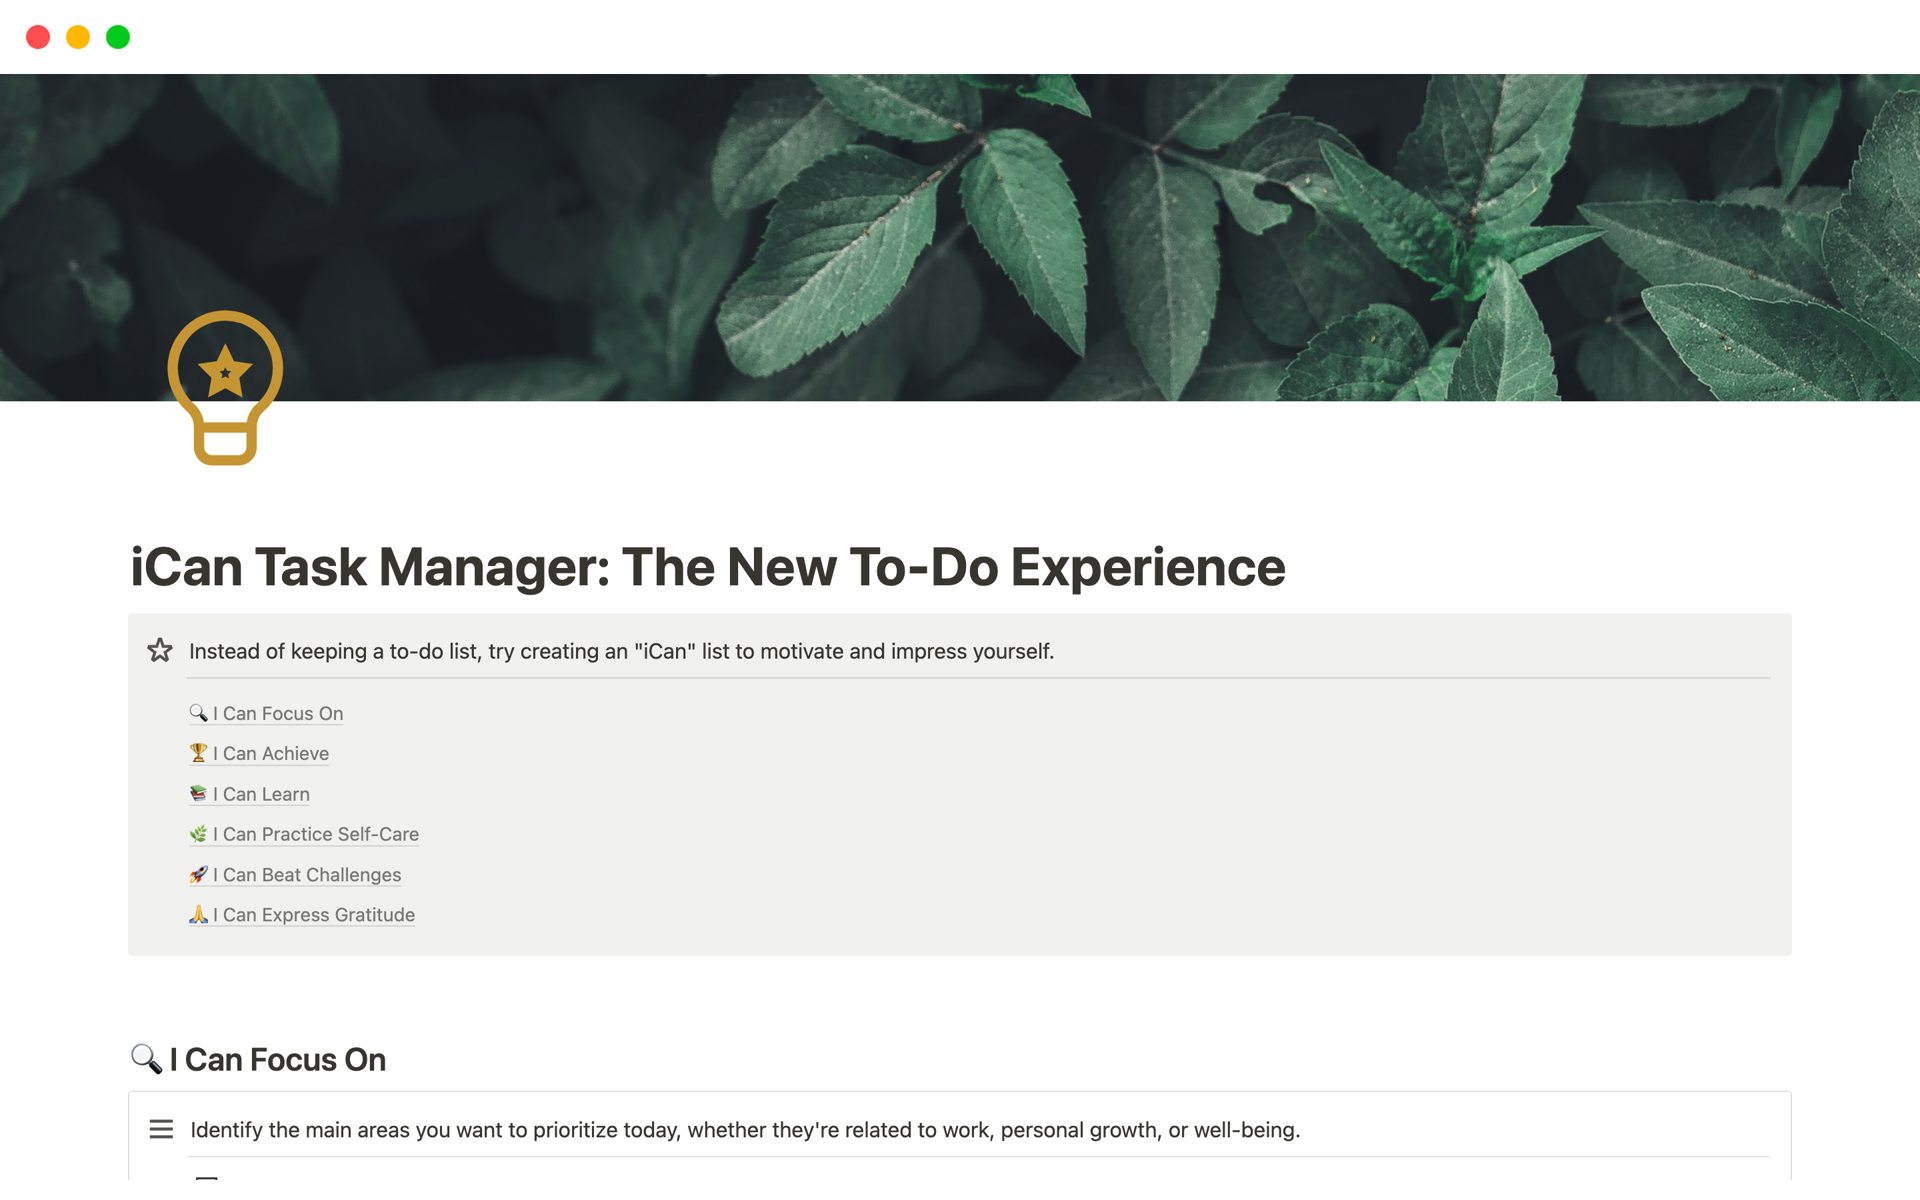 Vista previa de una plantilla para iCan Task Manager: The New To-Do Experience